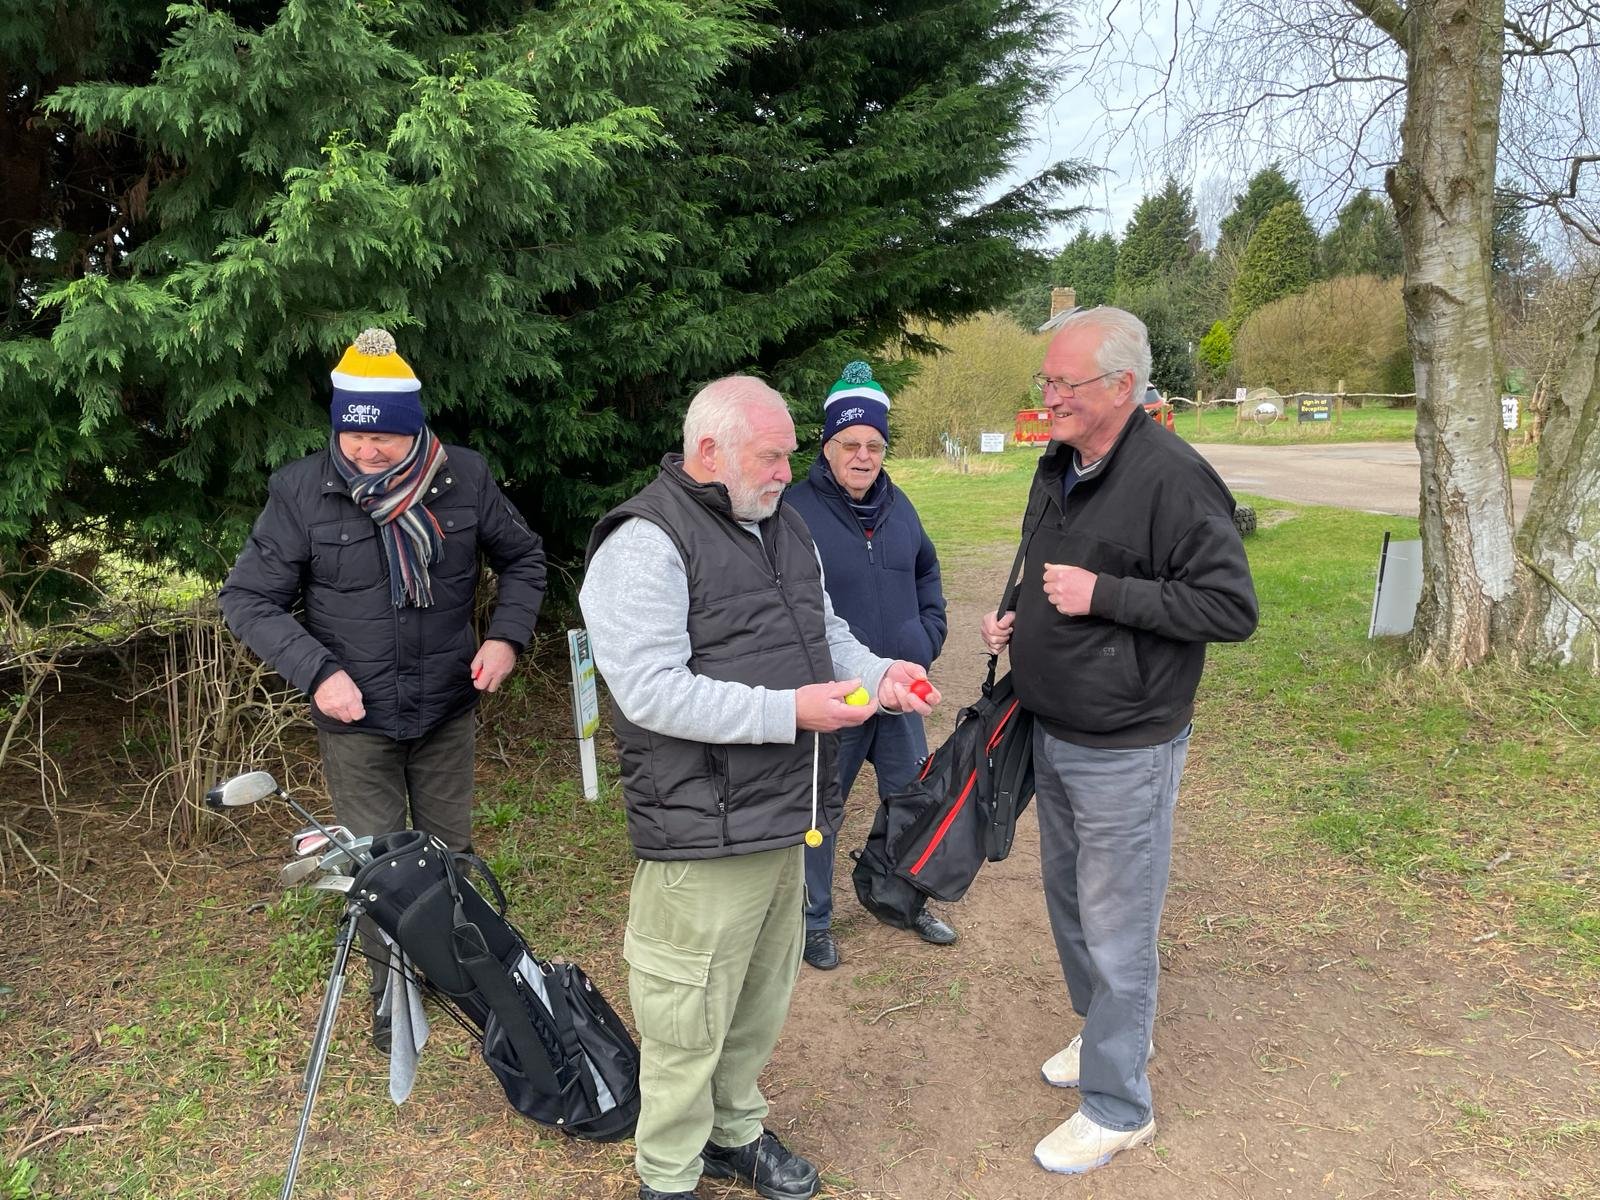 Golf in Society - Sandy (John), Paul, Harry and Vic